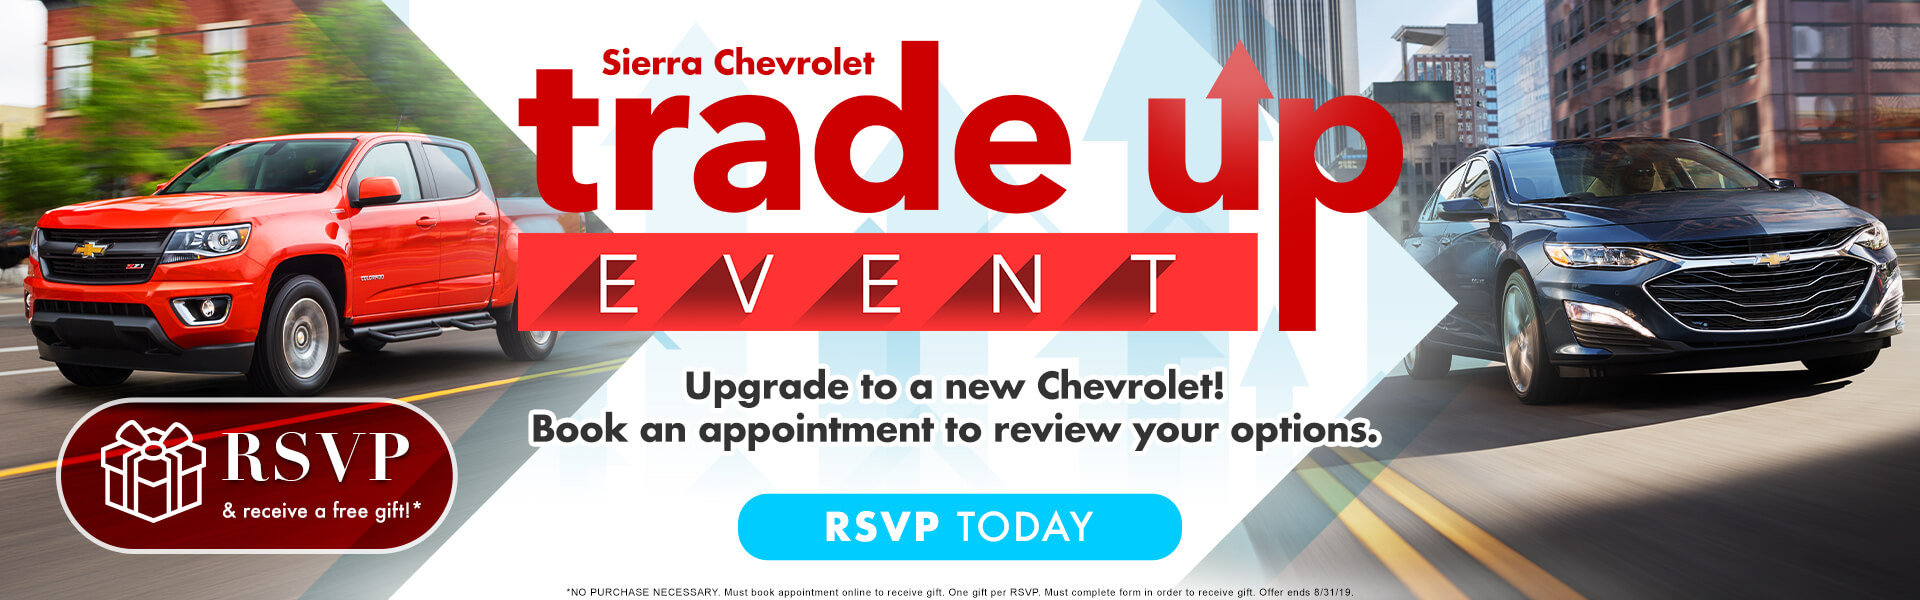 Chevrolet Trade Up Event - Sierra Chevrolet